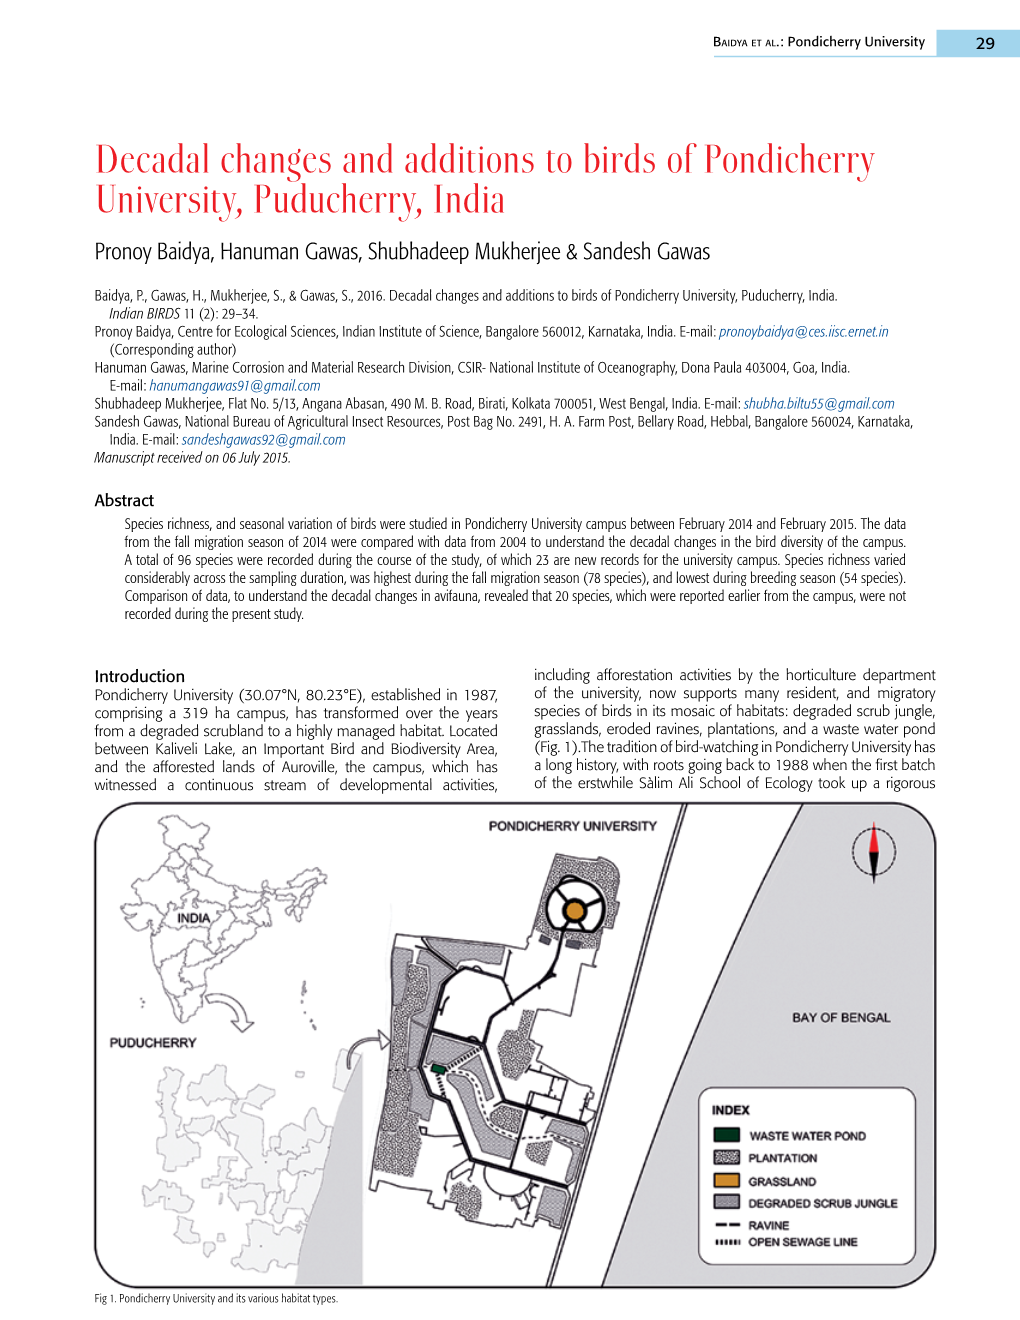 Decadal Changes and Additions to Birds of Pondicherry University, Puducherry, India Pronoy Baidya, Hanuman Gawas, Shubhadeep Mukherjee & Sandesh Gawas